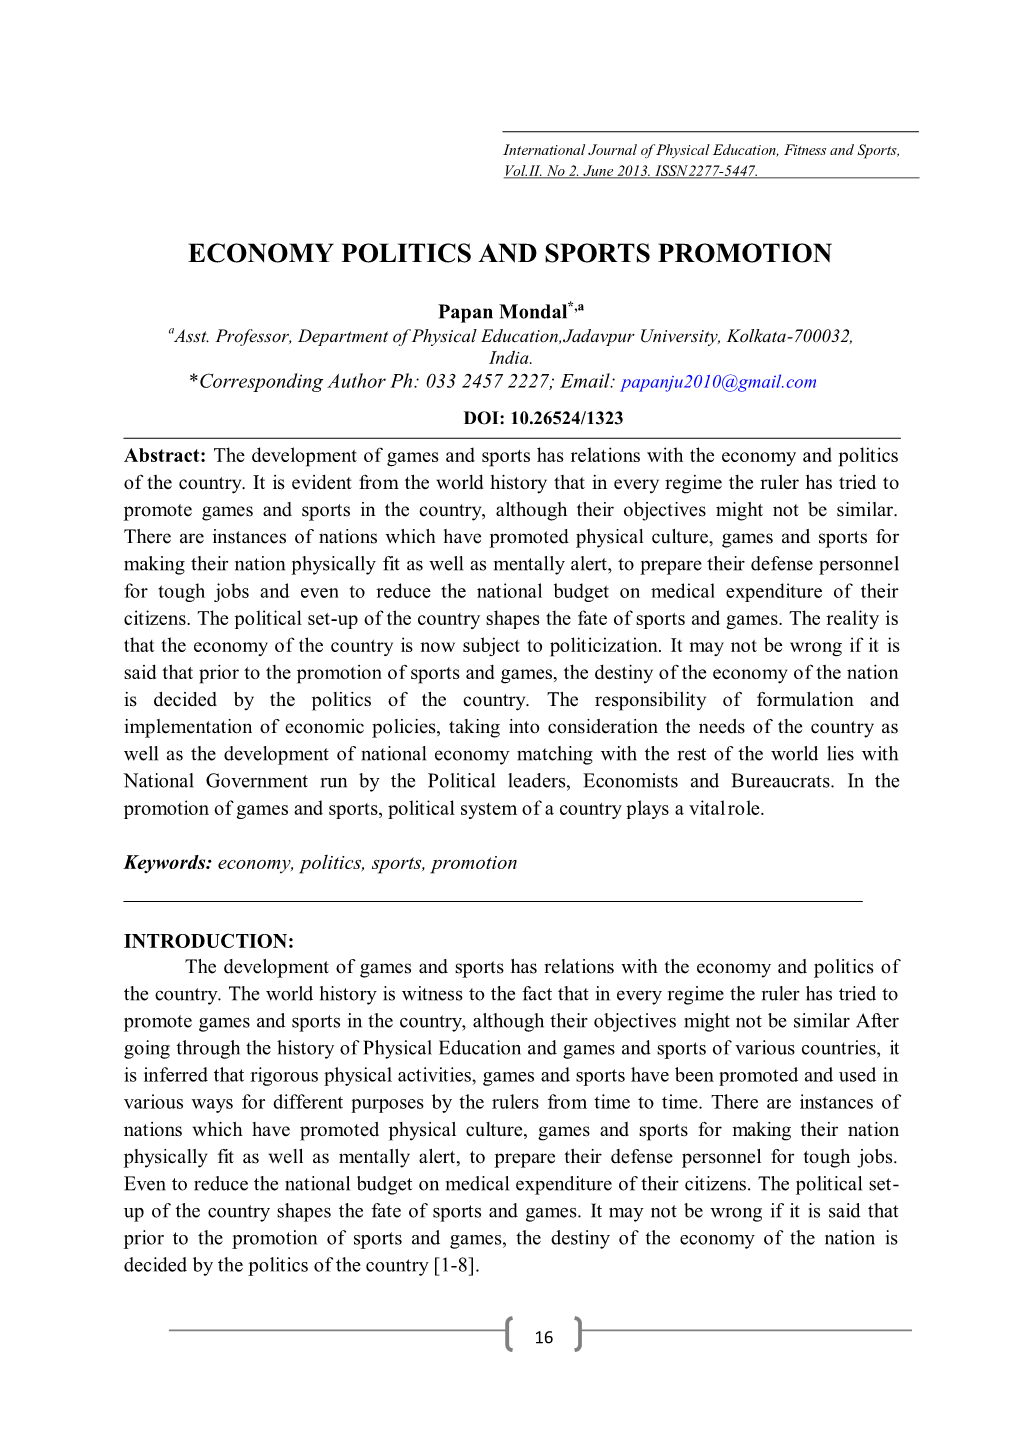 Economy Politics and Sports Promotion